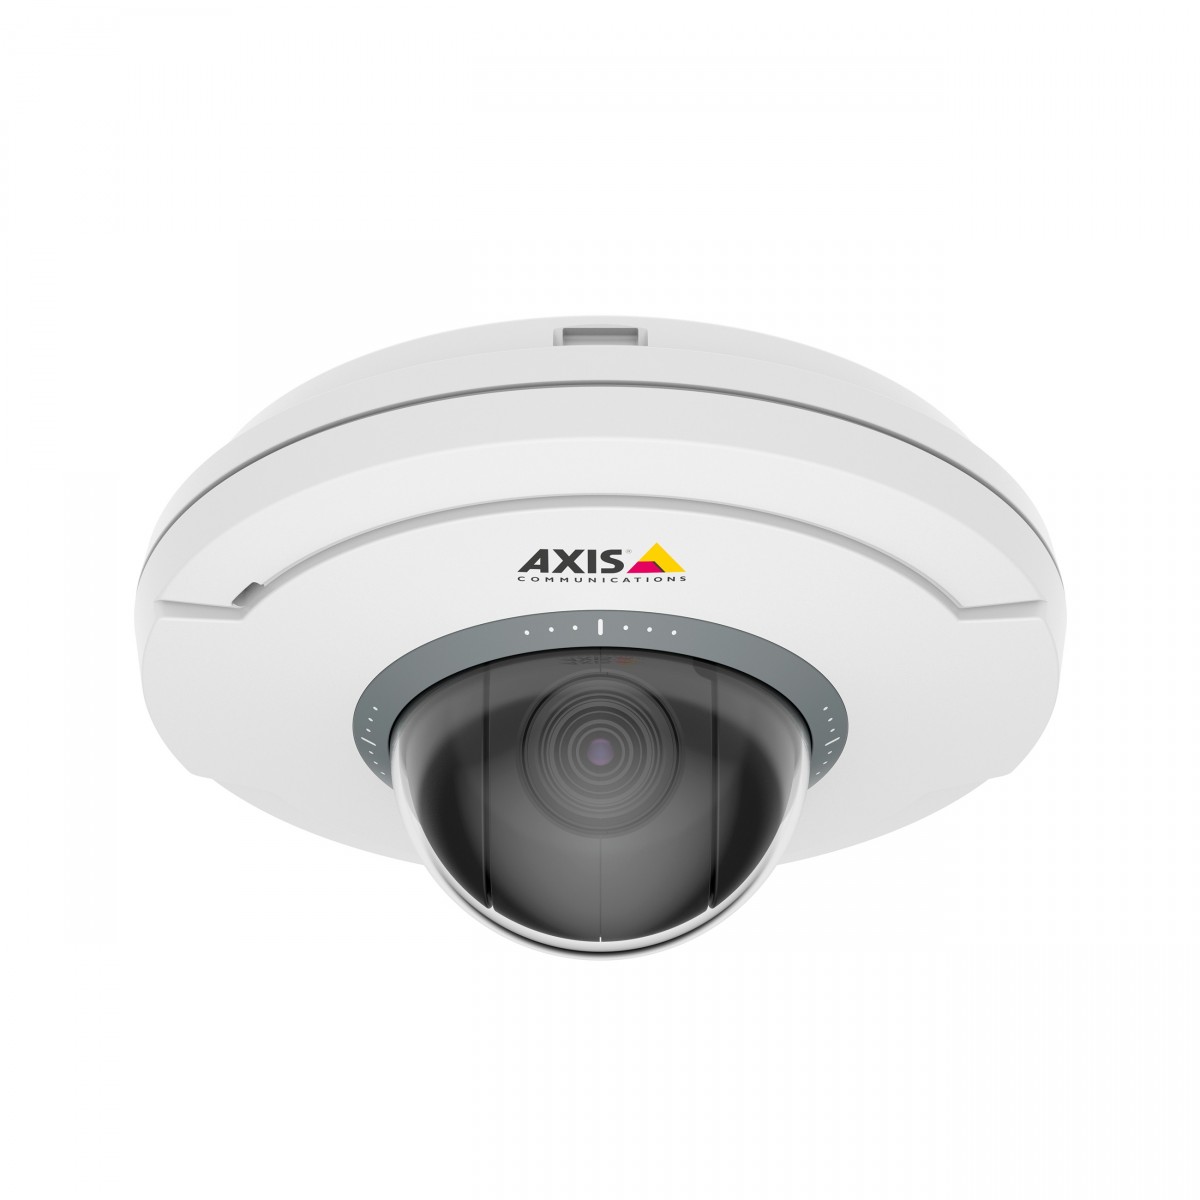 Axis M5075-G Ceiling-mount mini PTZ dome cam 5x Optical zoom autofocus HDTV 1080p 30fps H.